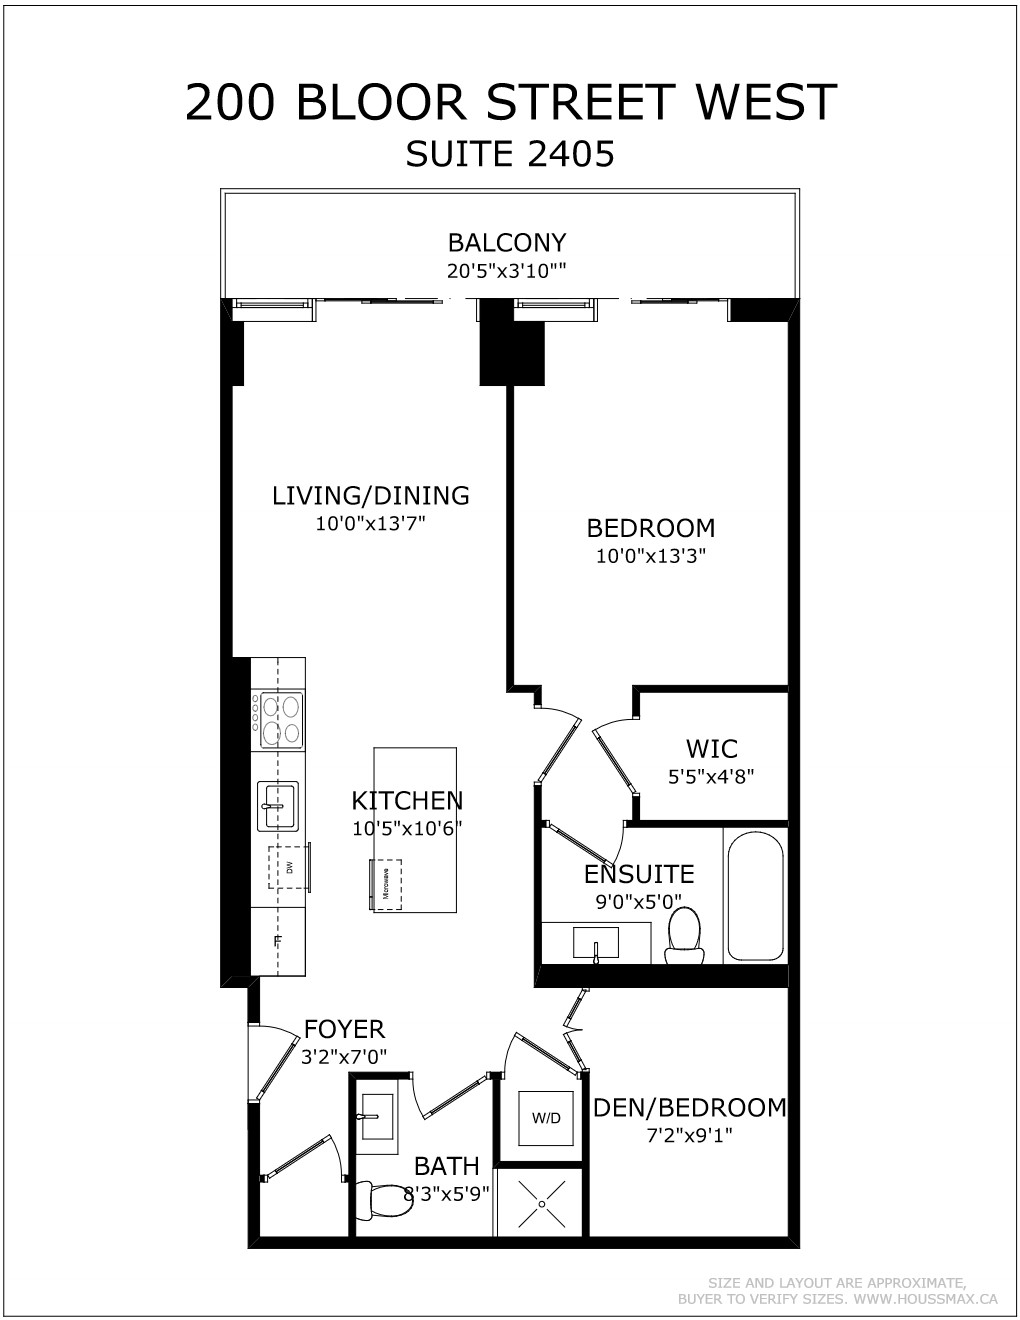 Floor plans for 200 Bloor St W Unit 2405.